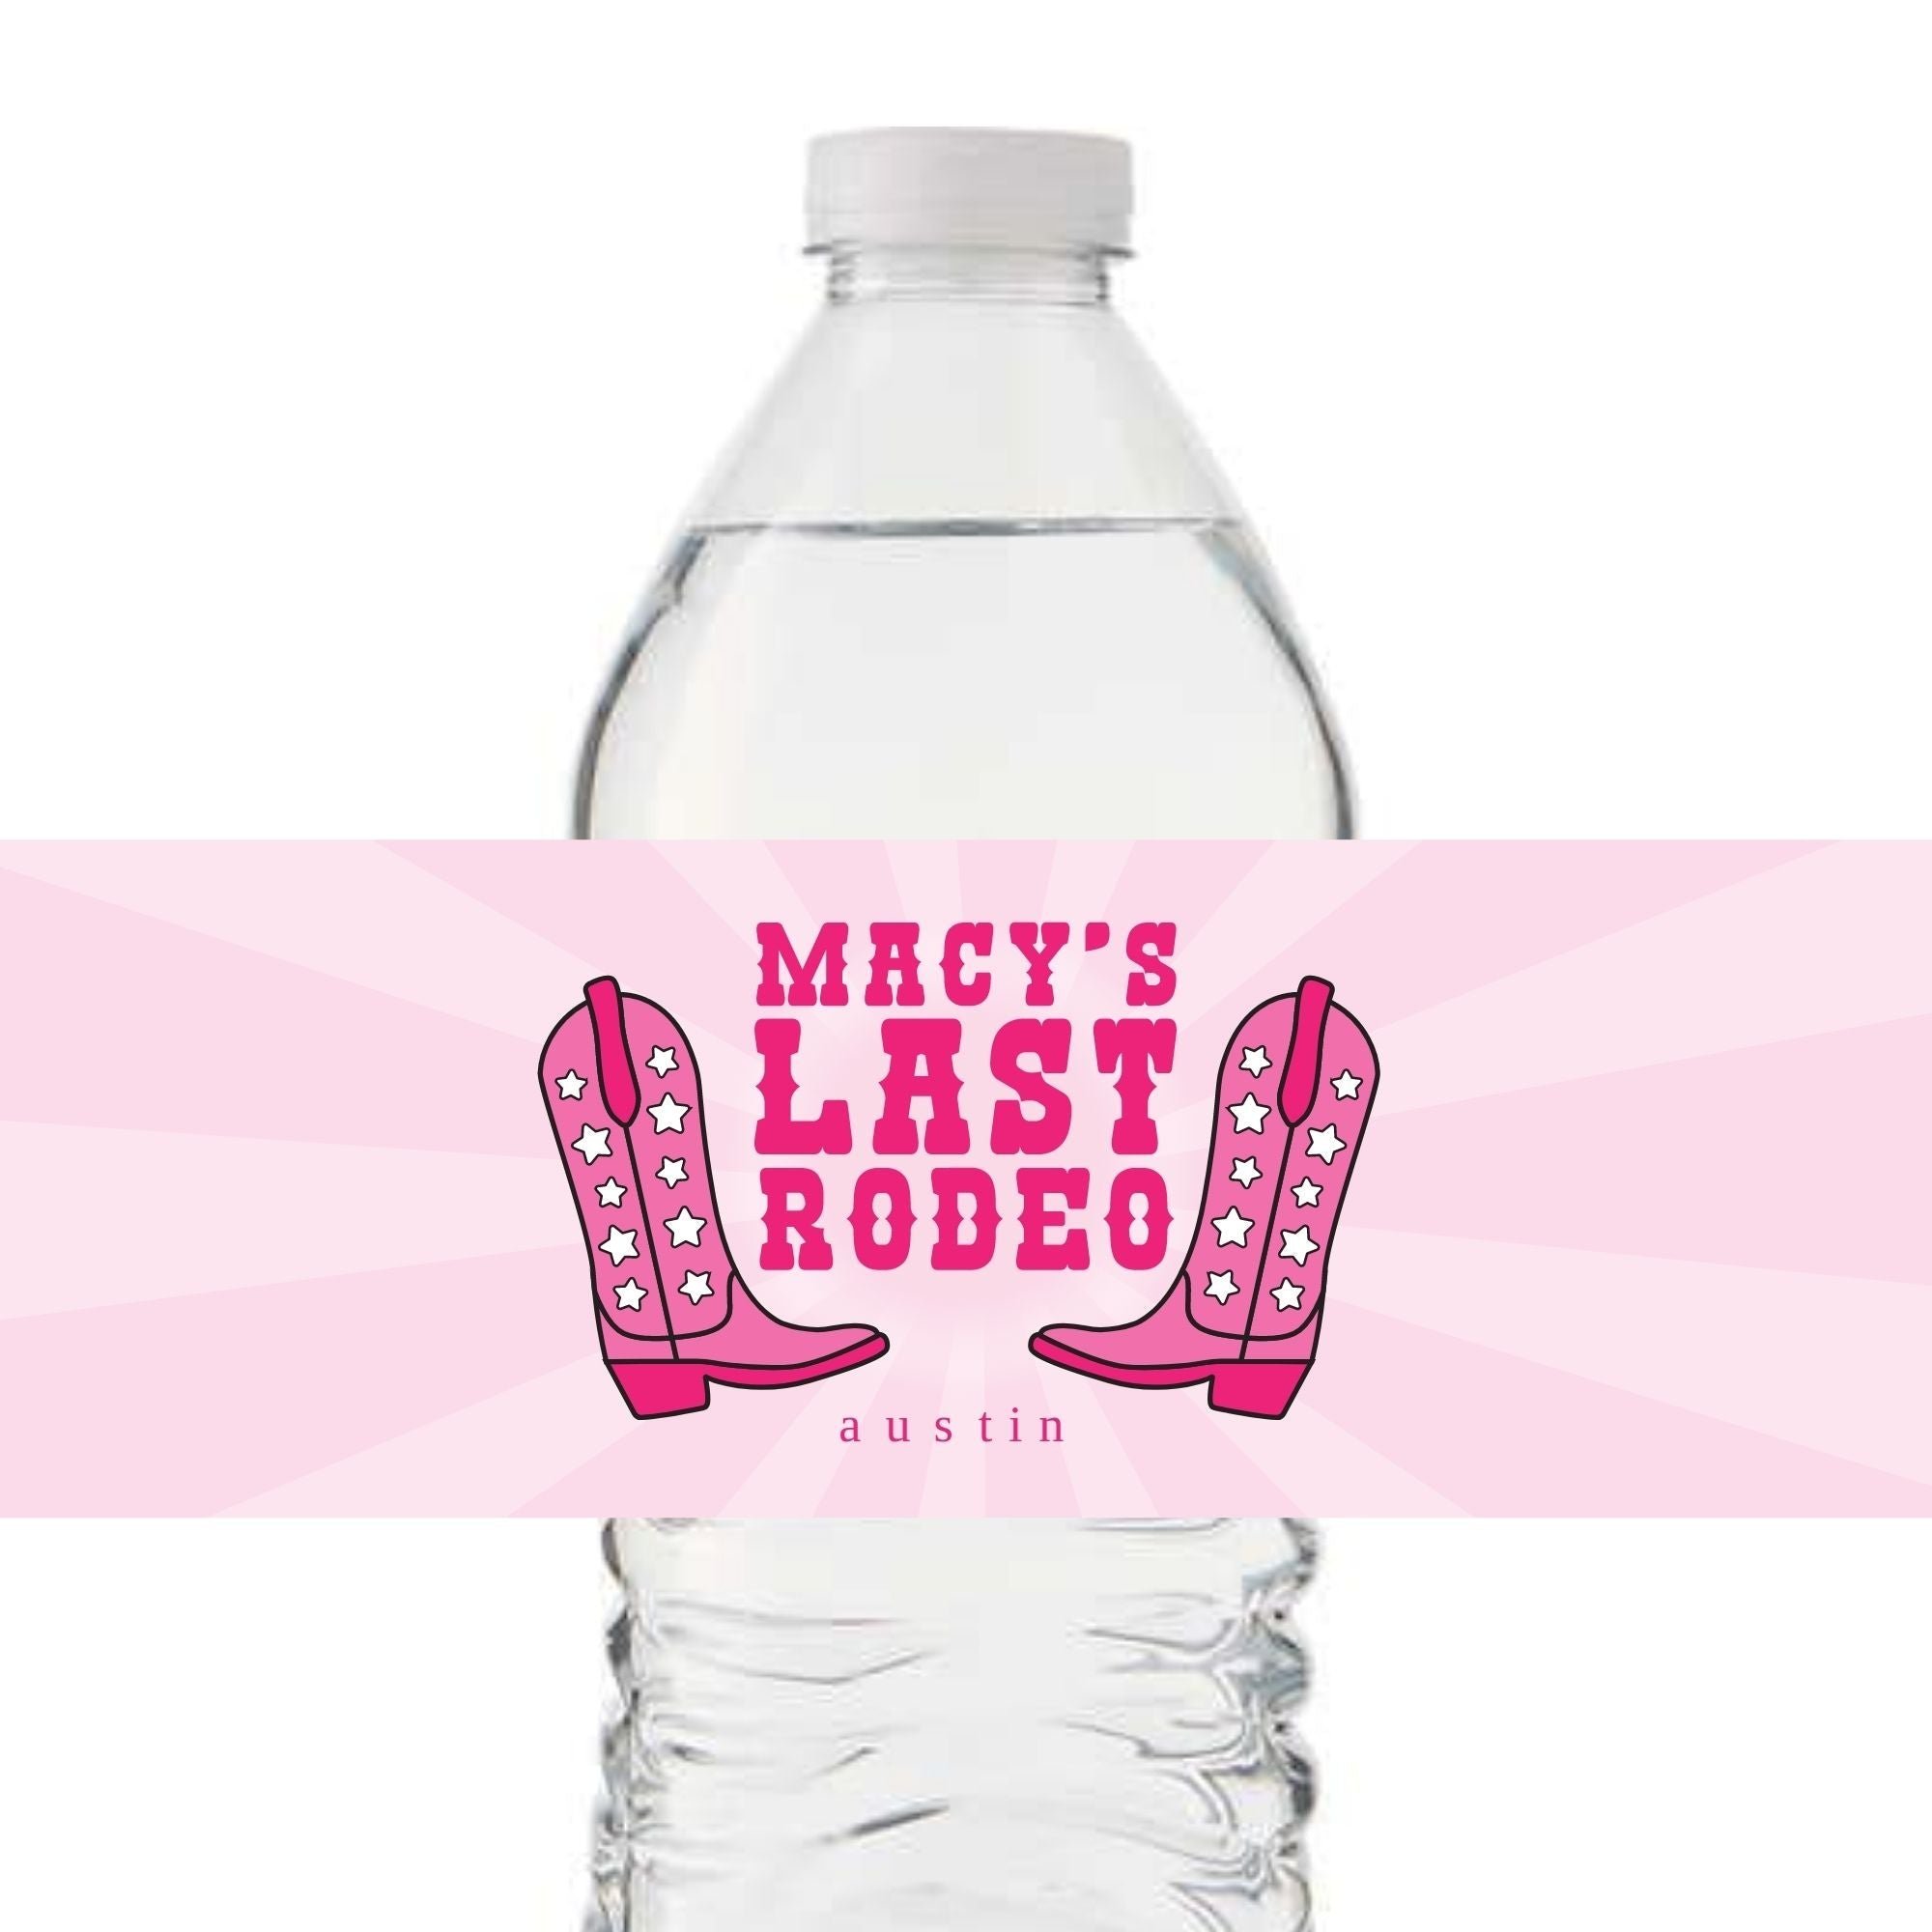 Full Wrap Water Bottle Label - Custom Design (Set of 10) - Sprinkled With  Pink